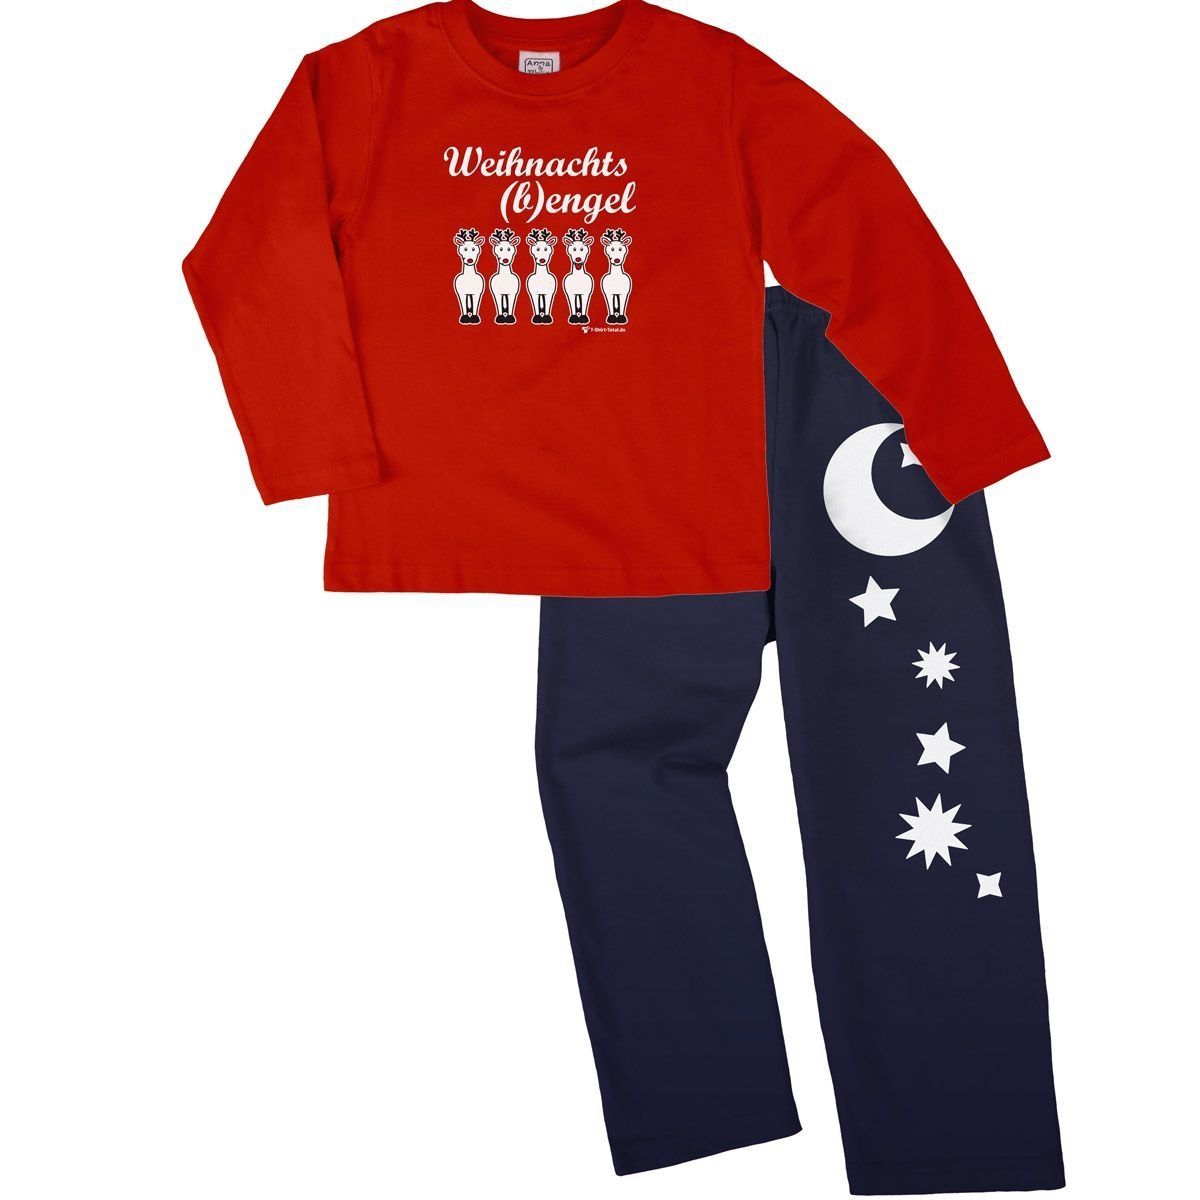 Weihnachtsbengel Pyjama Set rot / navy 92